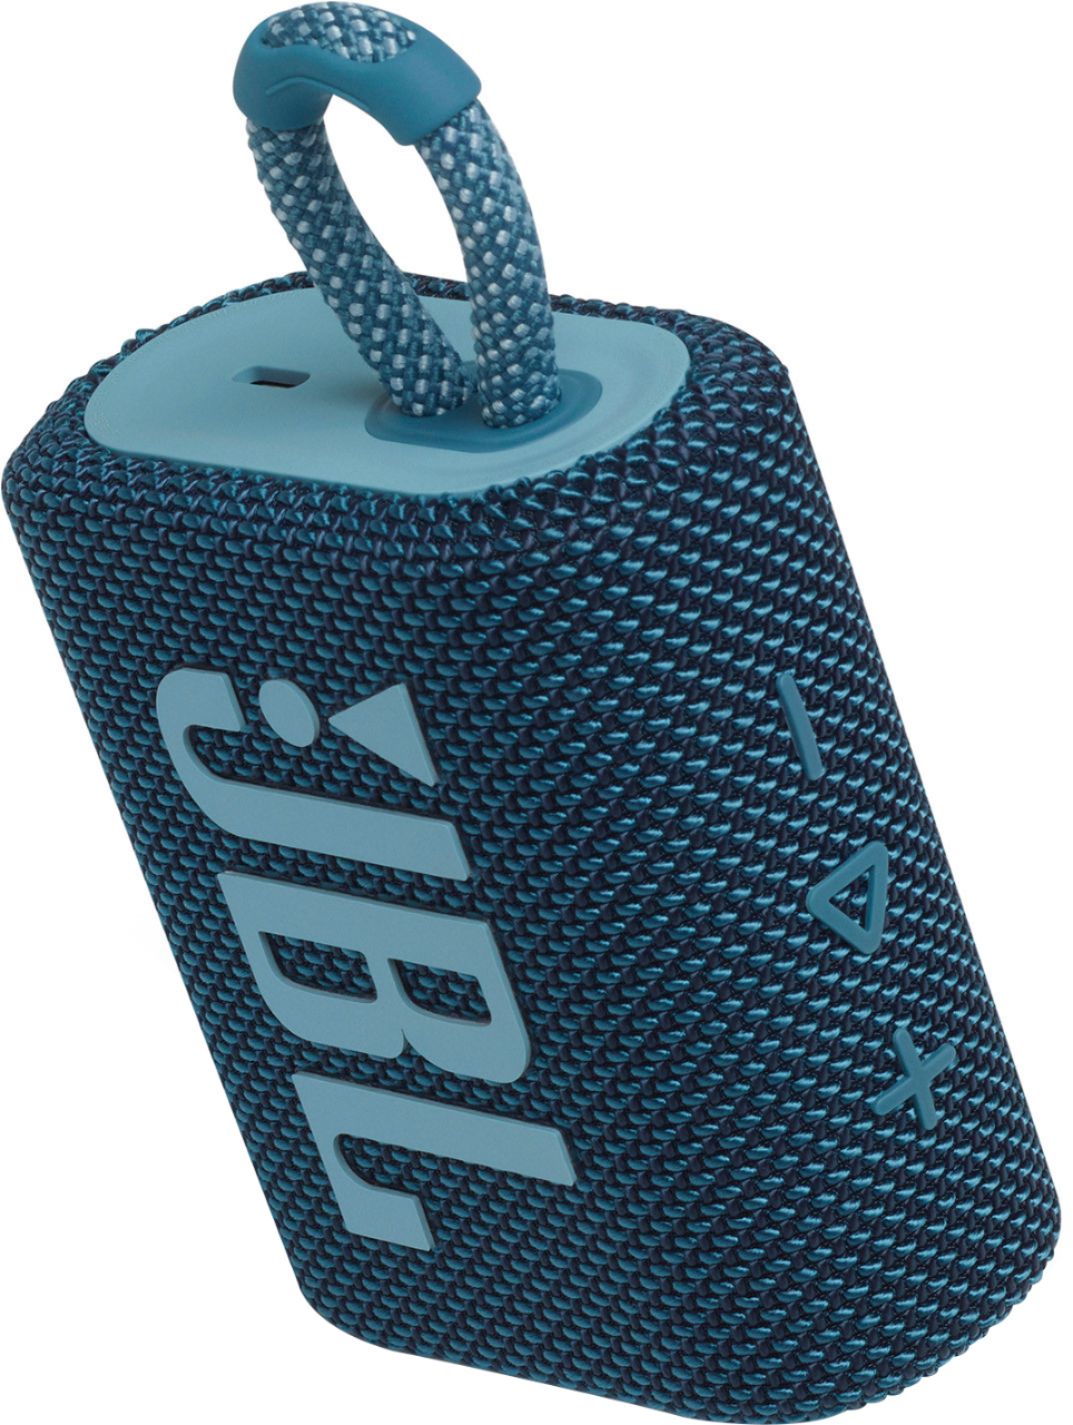 JBL Go 3 Portable Bluetooth Speaker (Blue)